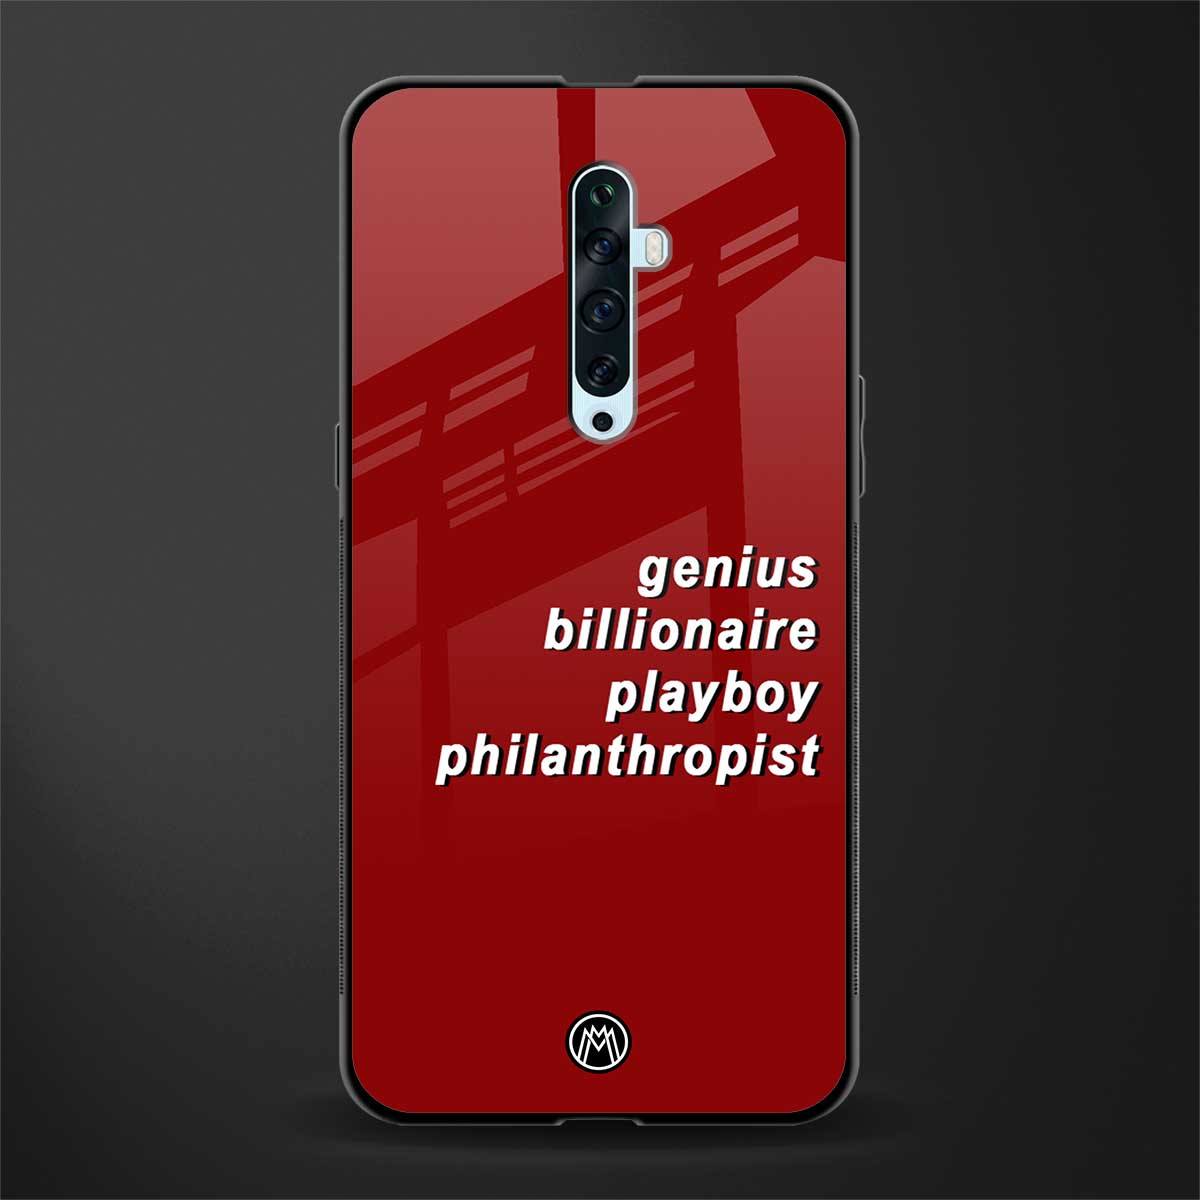 genius billionaire playboy philantrophist glass case for oppo reno 2z image